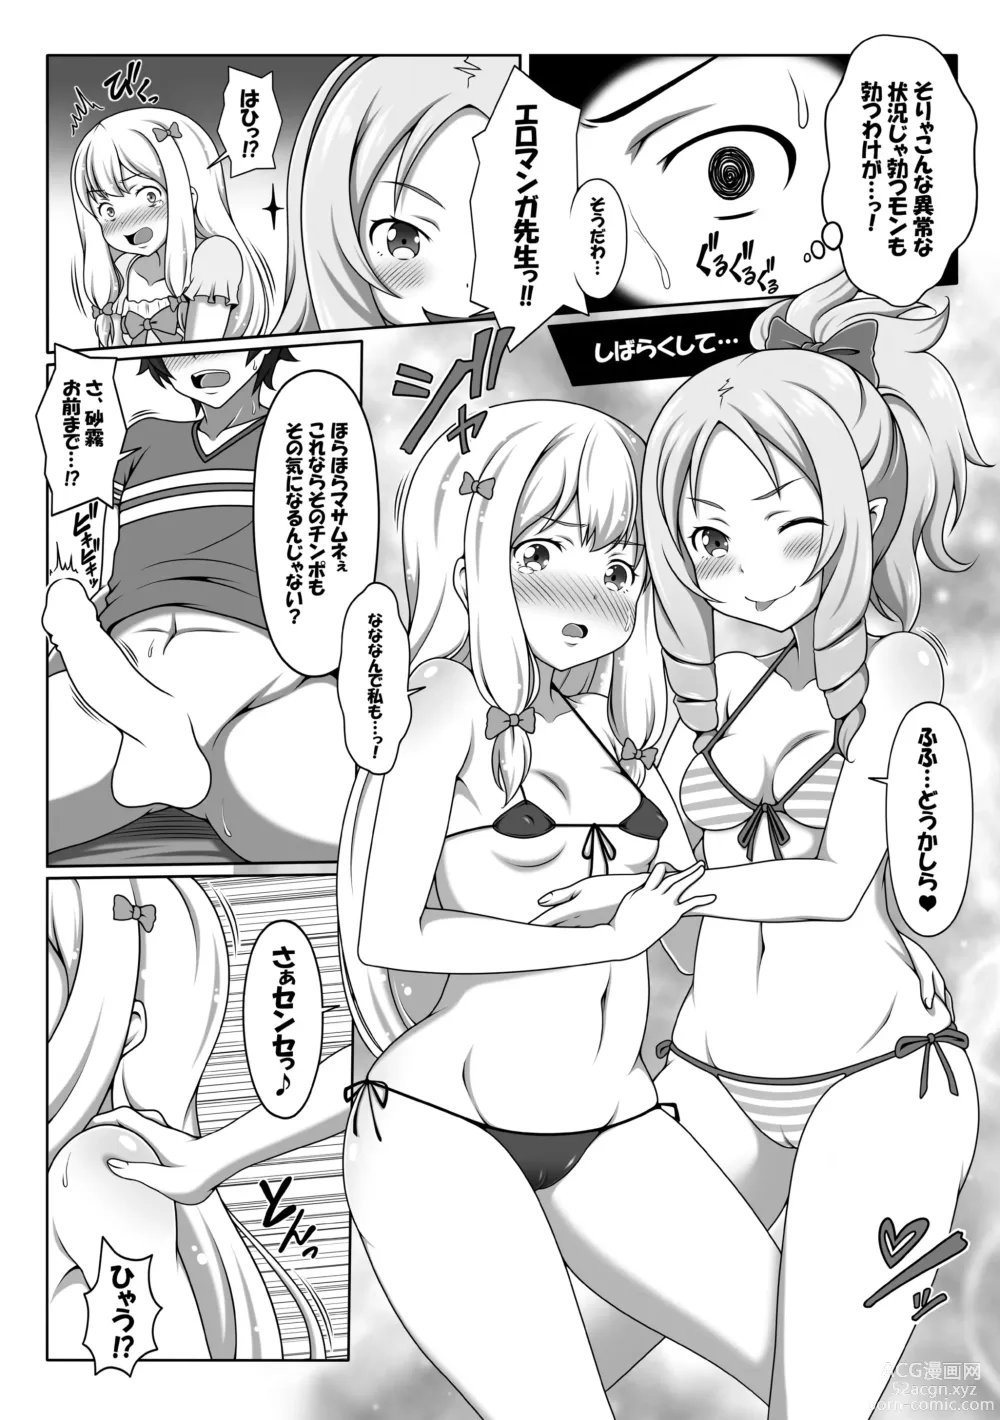 Page 7 of doujinshi Eromanga Kansatsuki